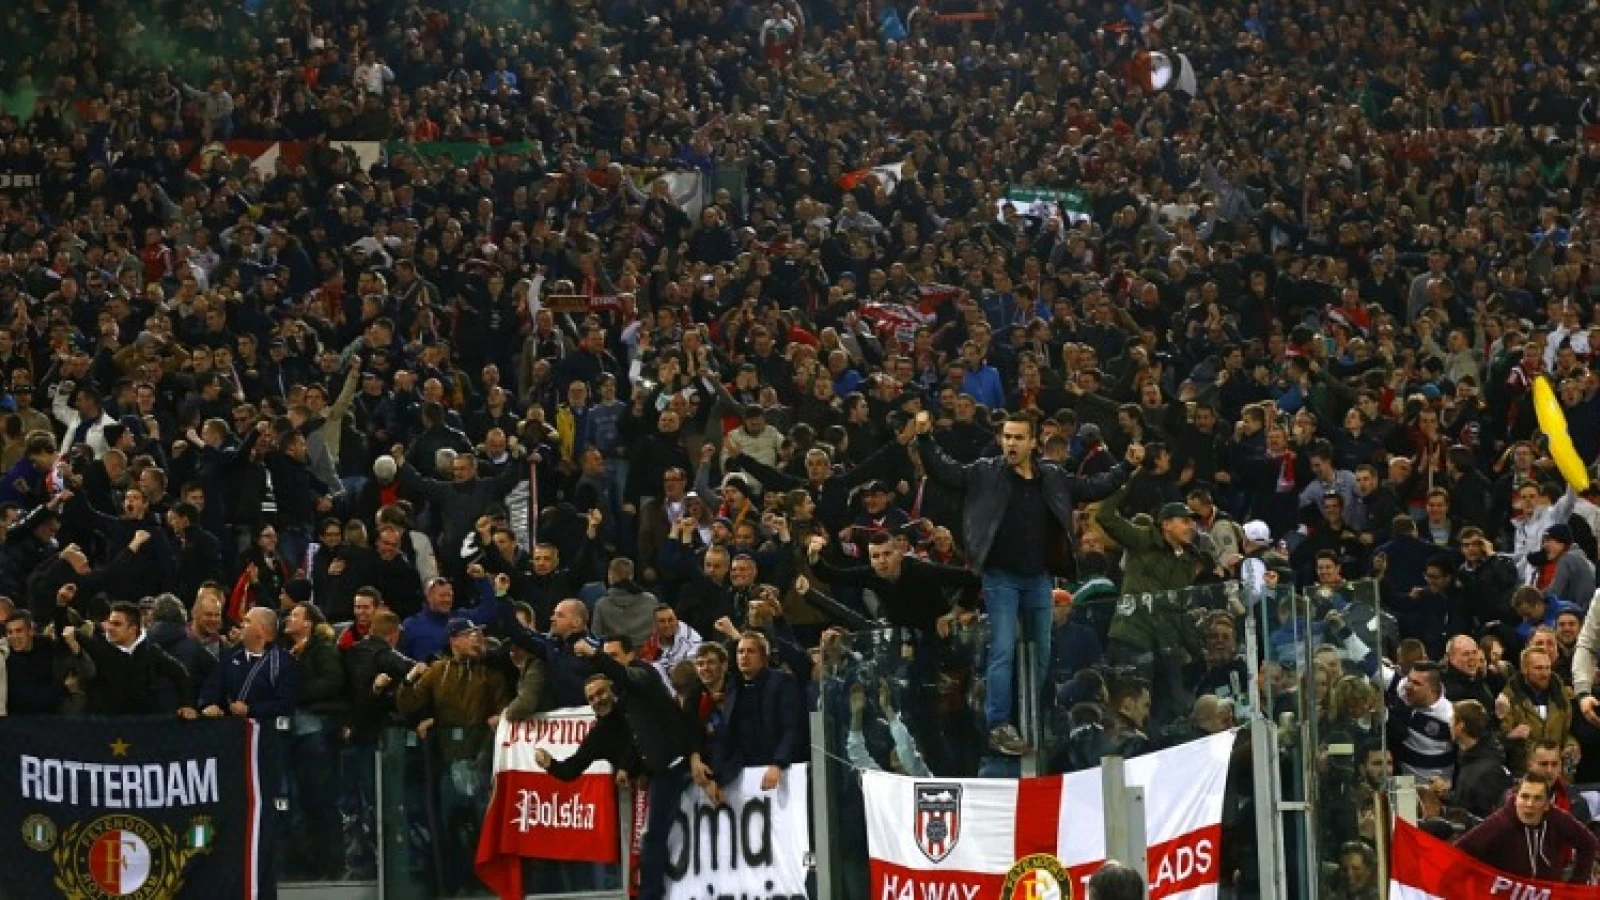 'Klein aantal supporters naar Istanbul'